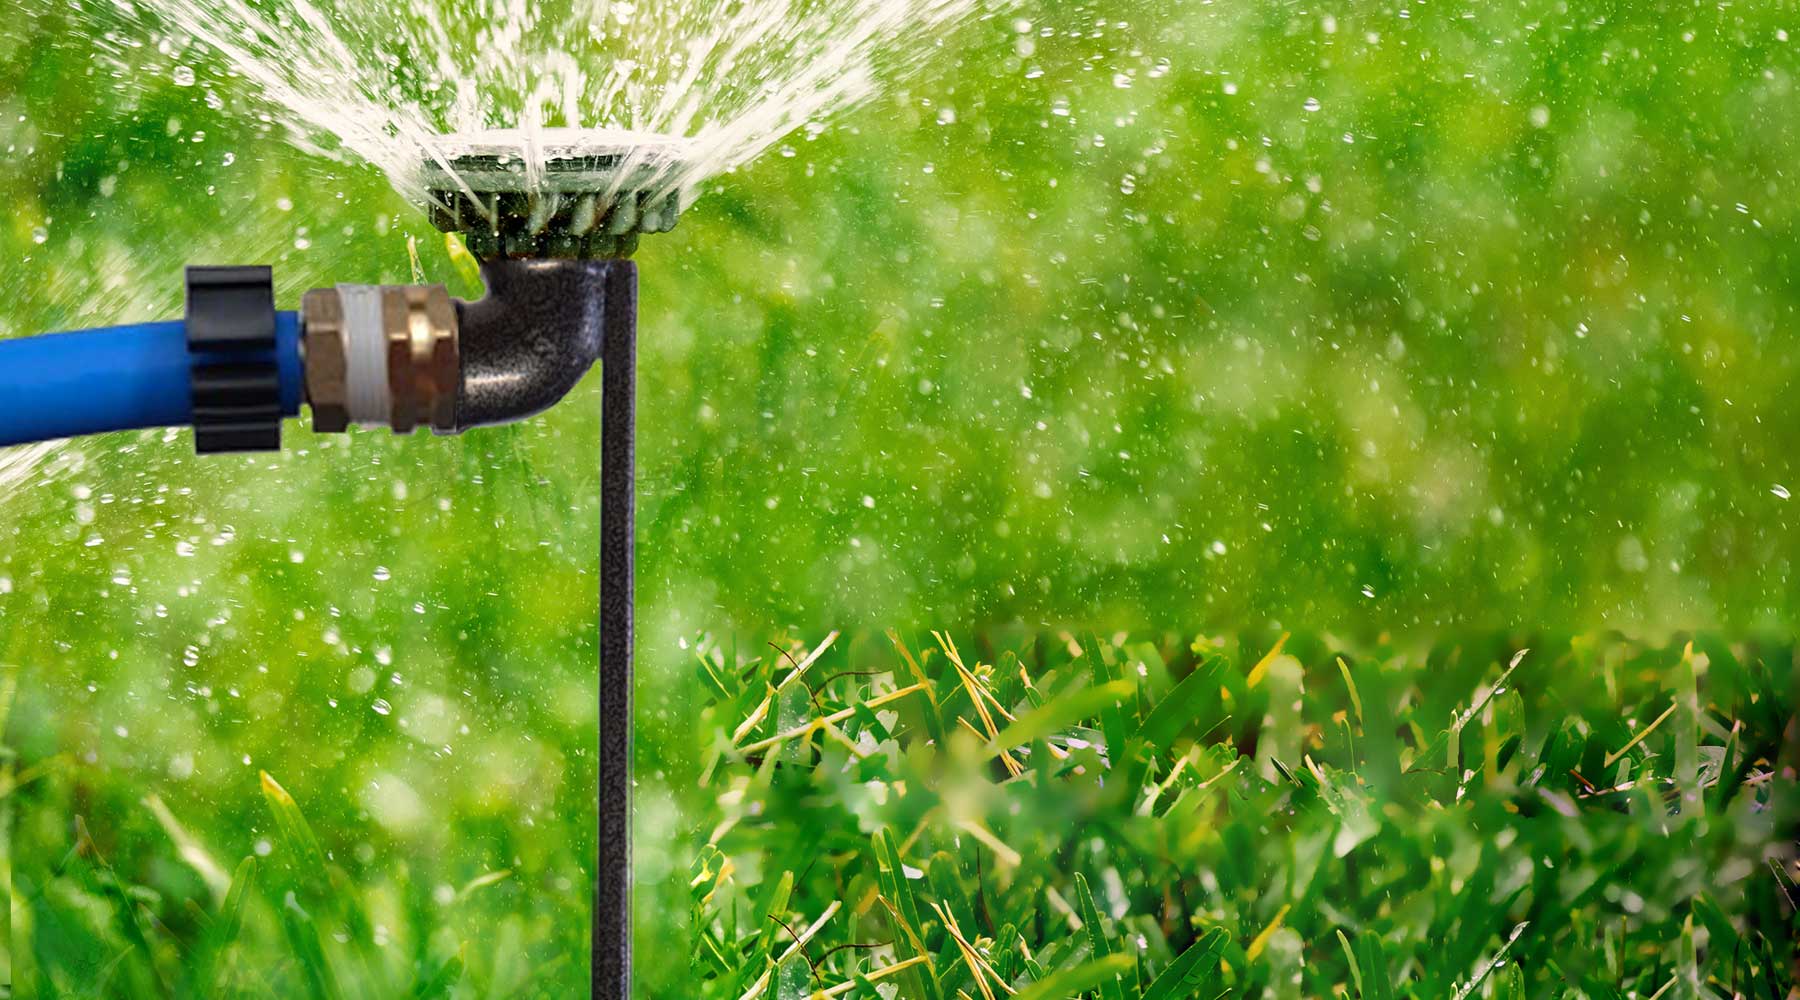 Garden hose sprinkler for watering lawn